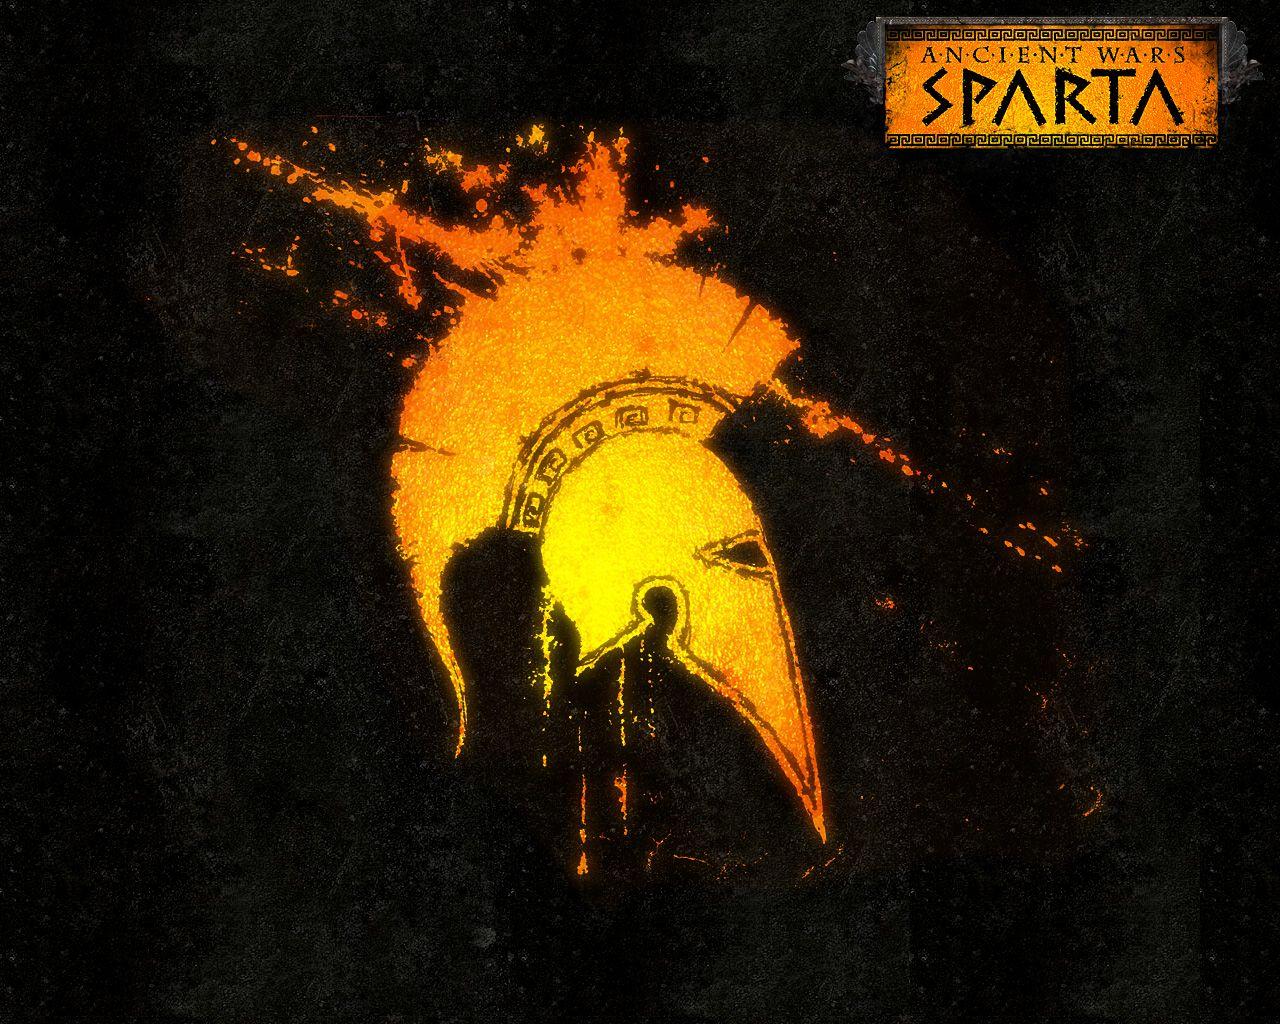 Spartan wallpaper